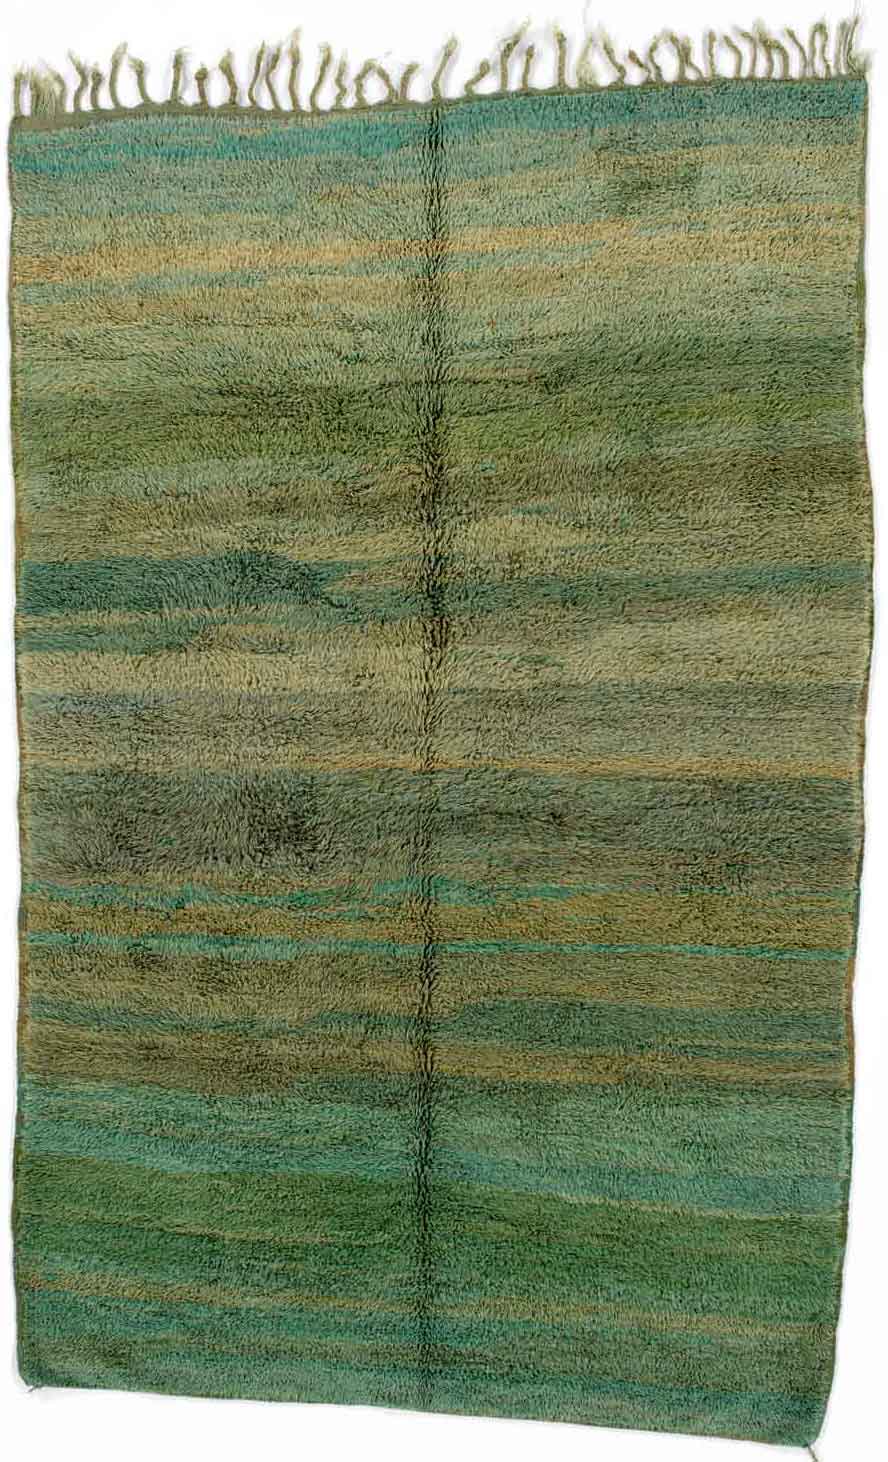 Beni Mguild pile rug, central Middle Atlas, Morocco, 1960. Jürgen Adam Collection at The International Design Museum, Munich